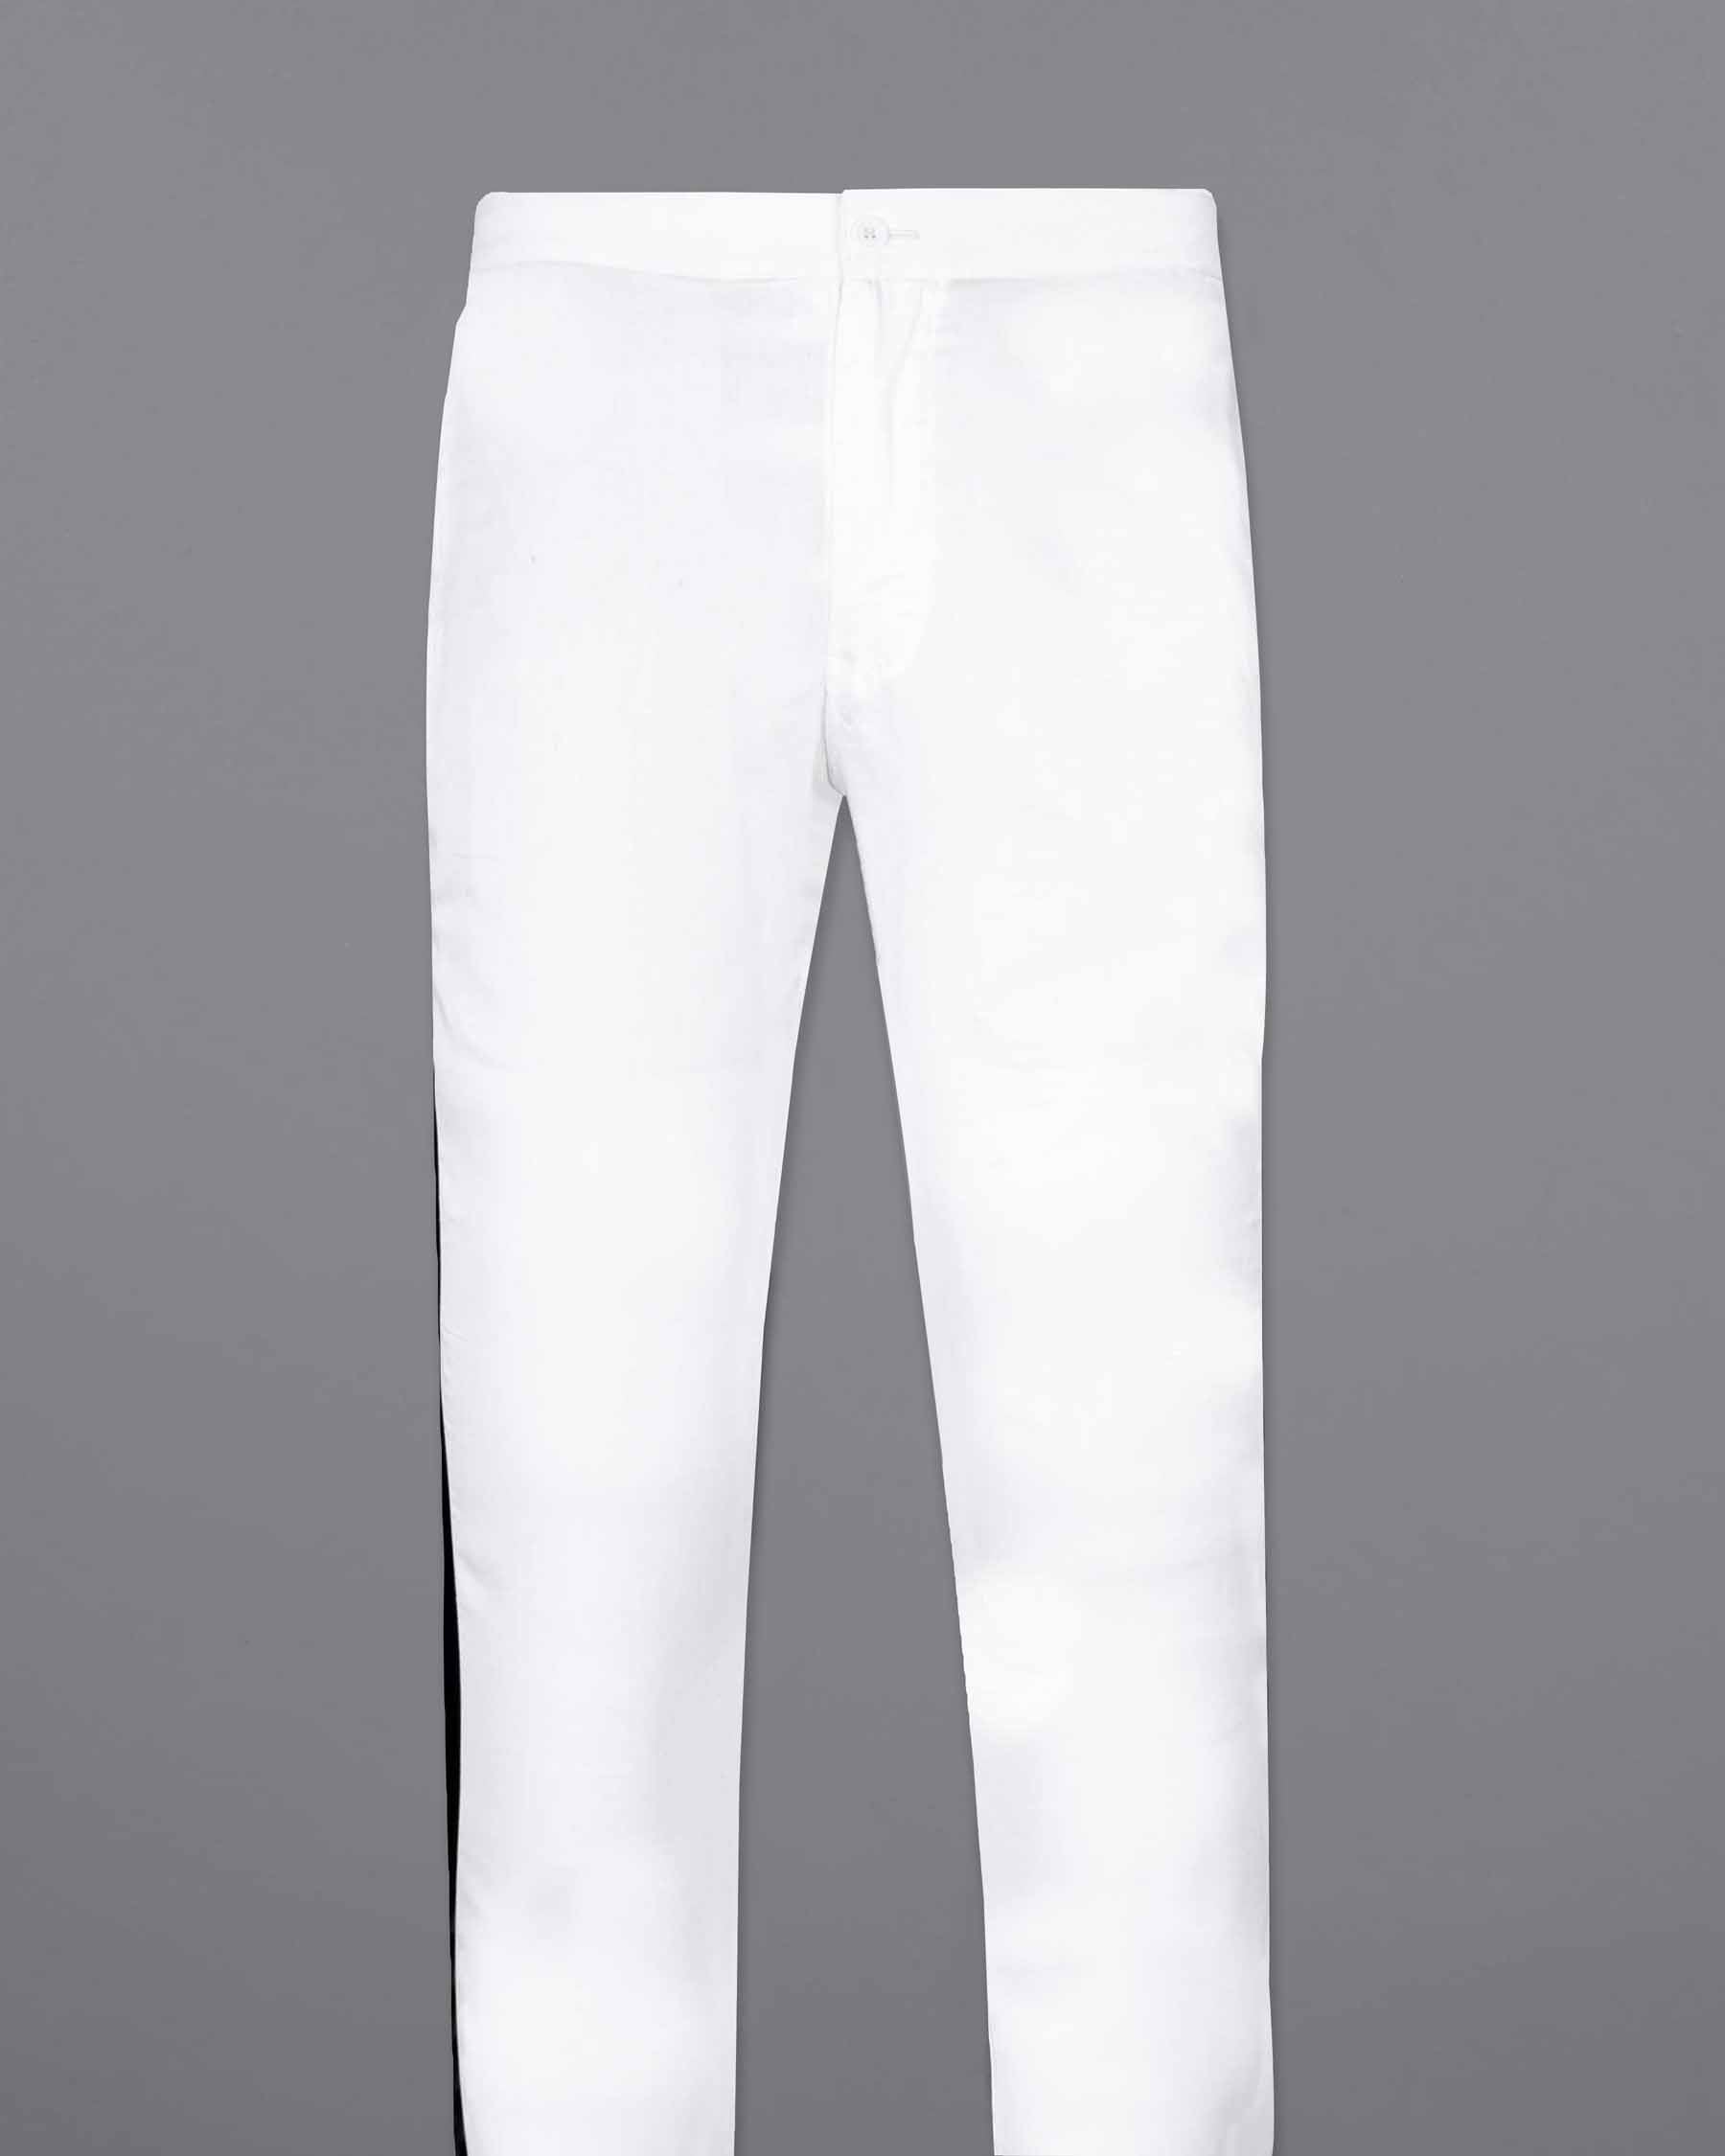 OOTD 4.2.19: Black Work Pants and White Blazer